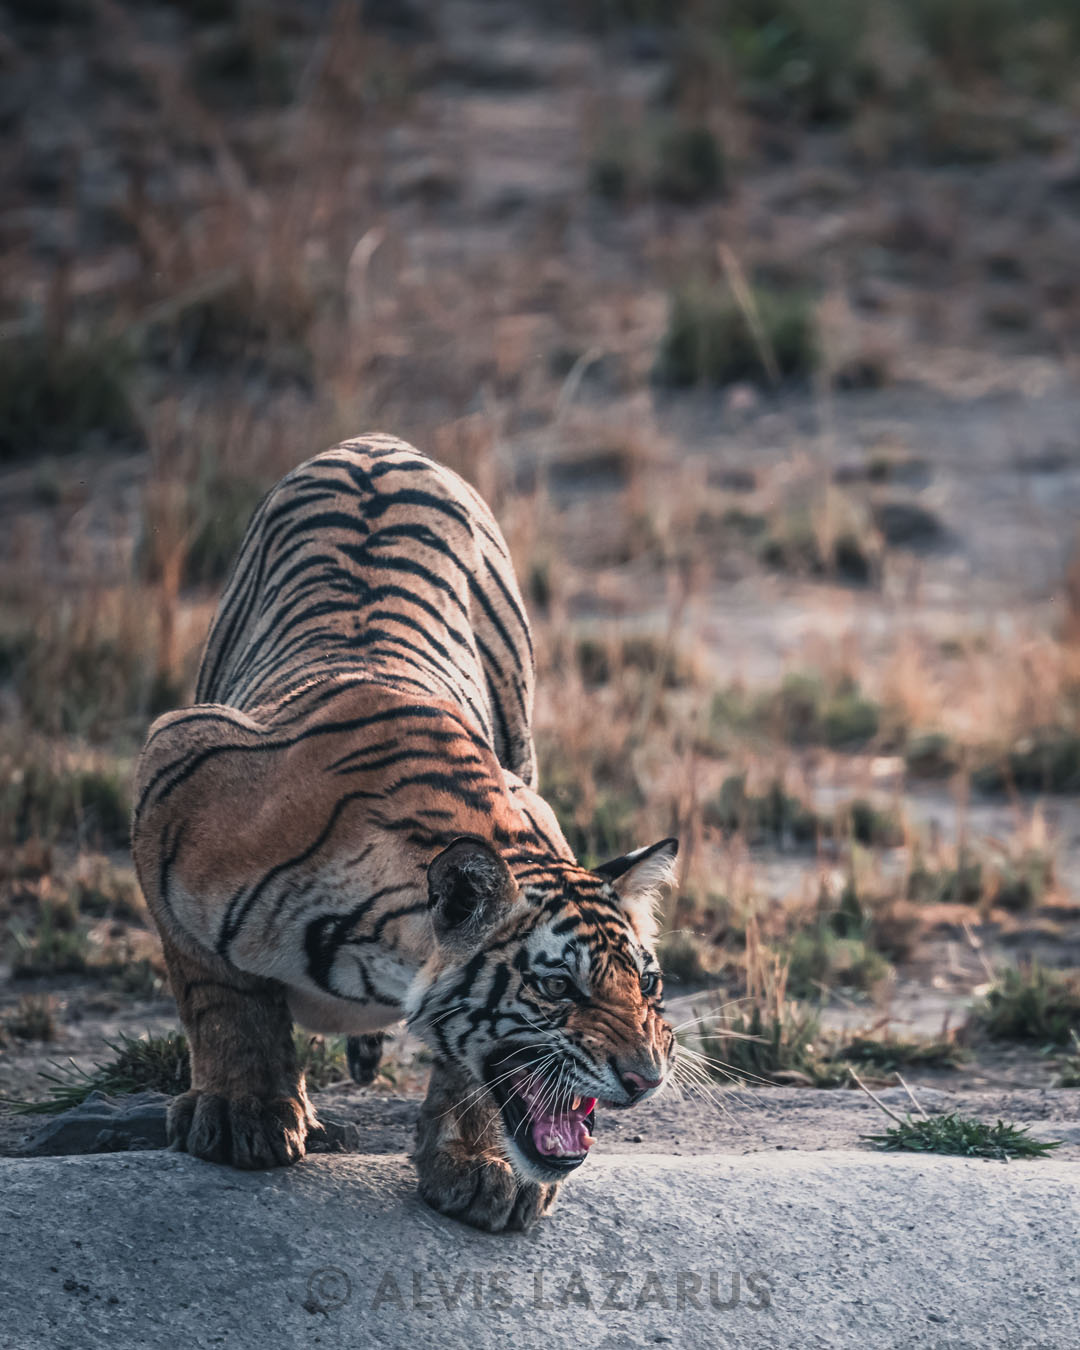 Alvis lazarus Wildlife Photography tiger